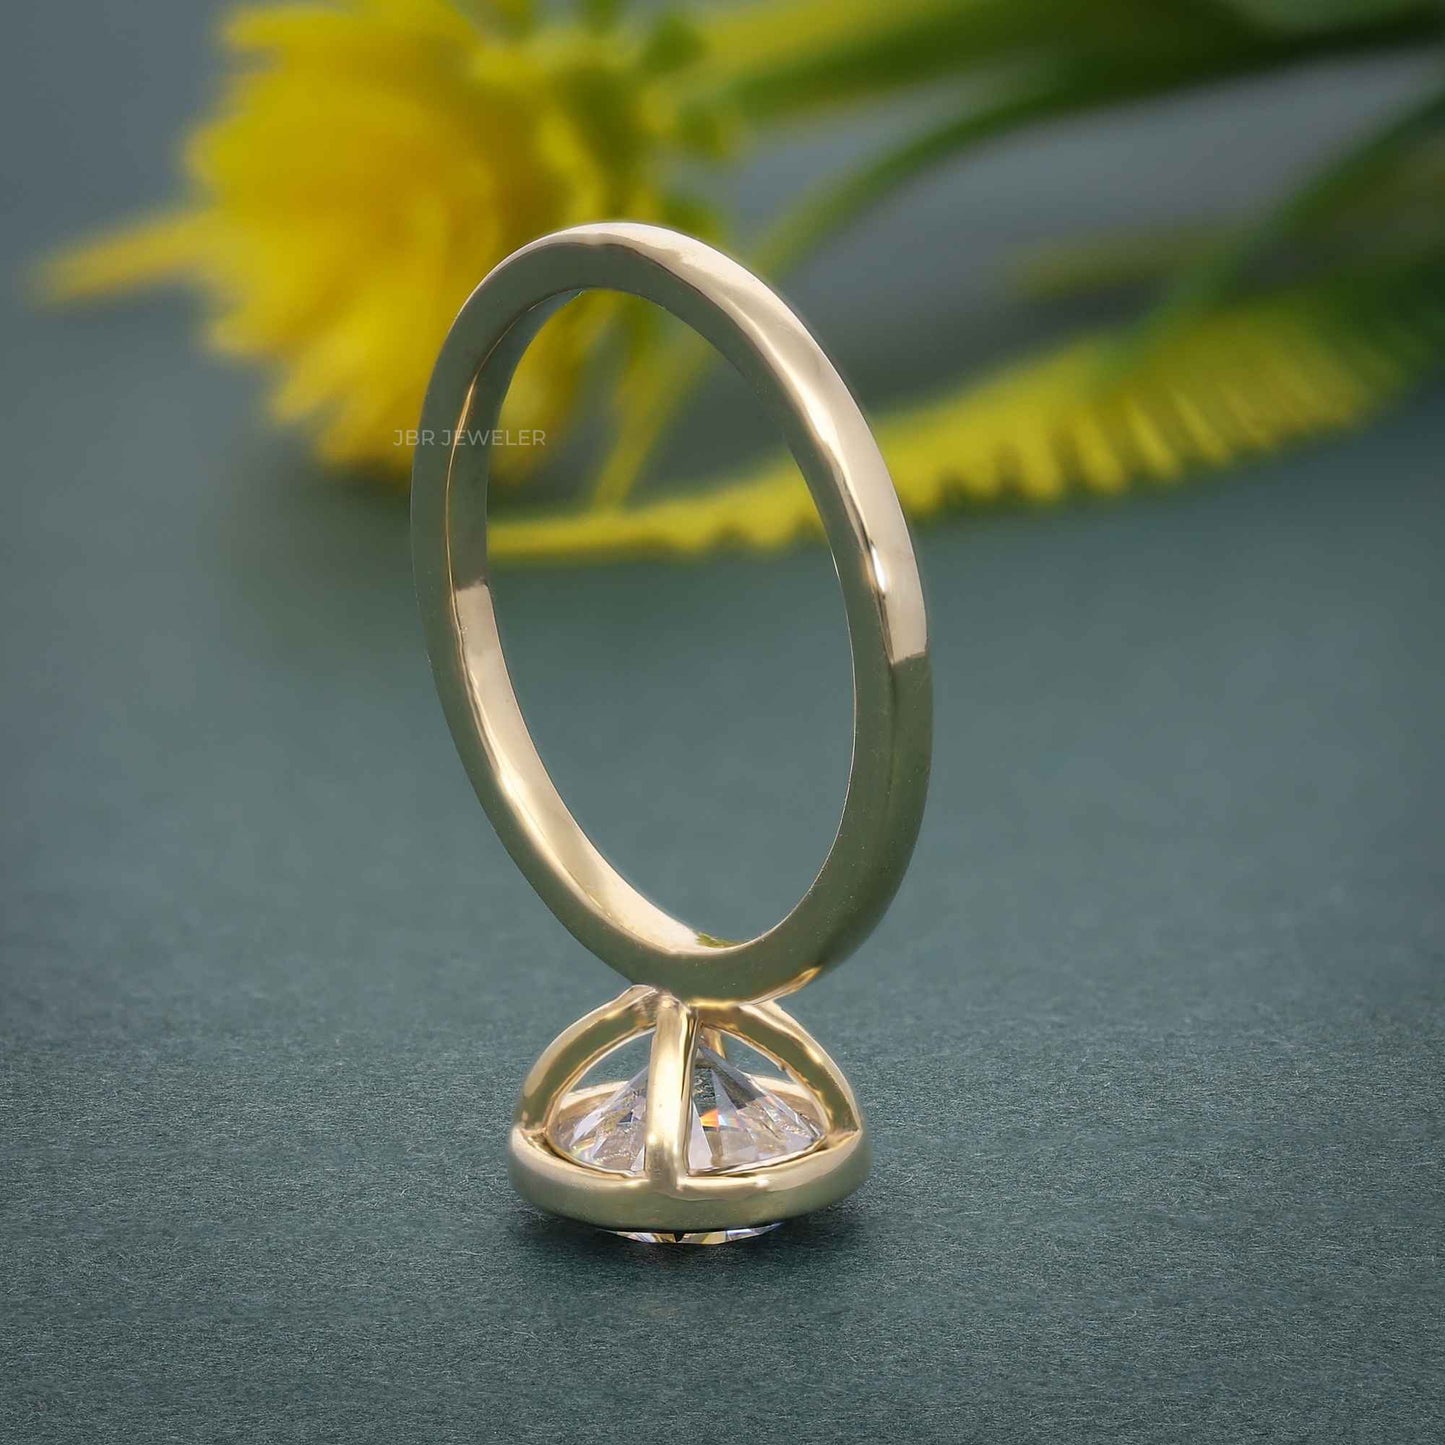 Classic Bezel Set Round Lab Grown Diamond Engagement Ring